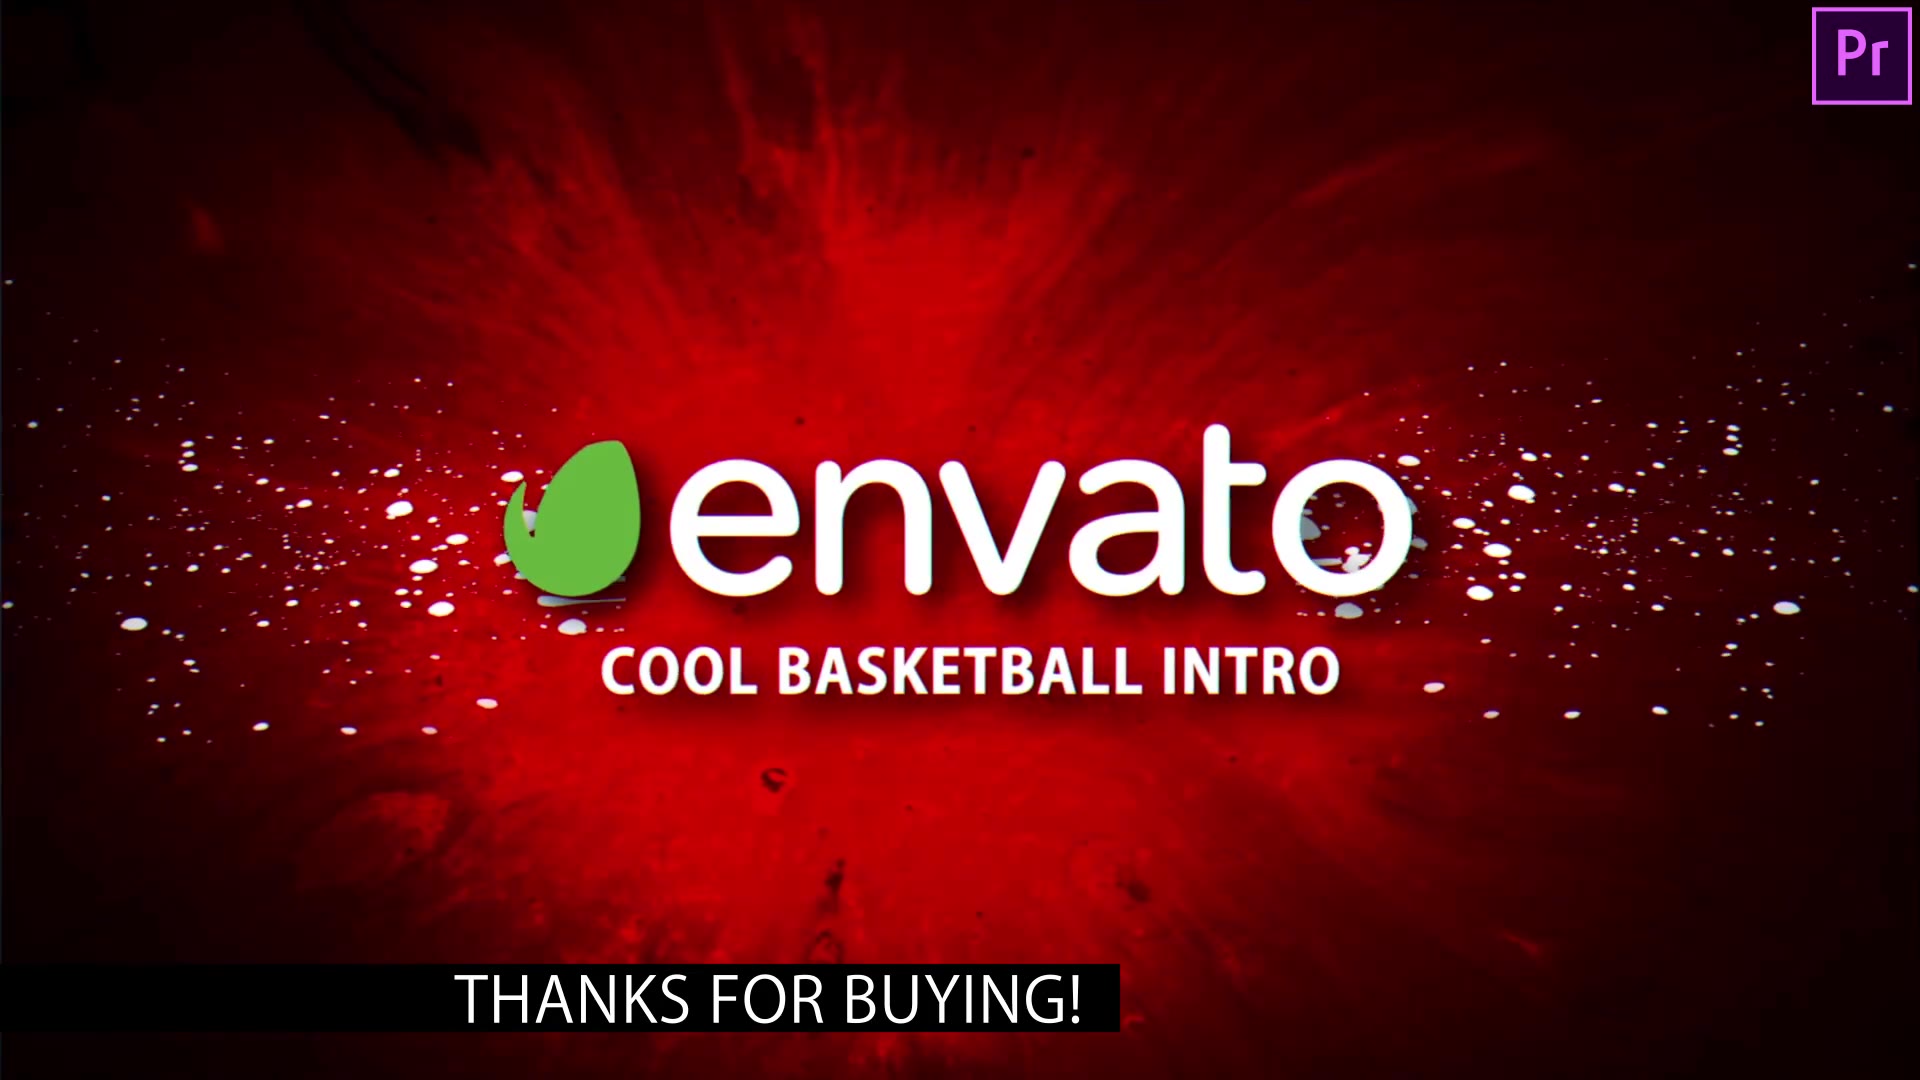 Cool Basketball Intro Basketball Promo Premiere Pro Videohive 34333174 Premiere Pro Image 11